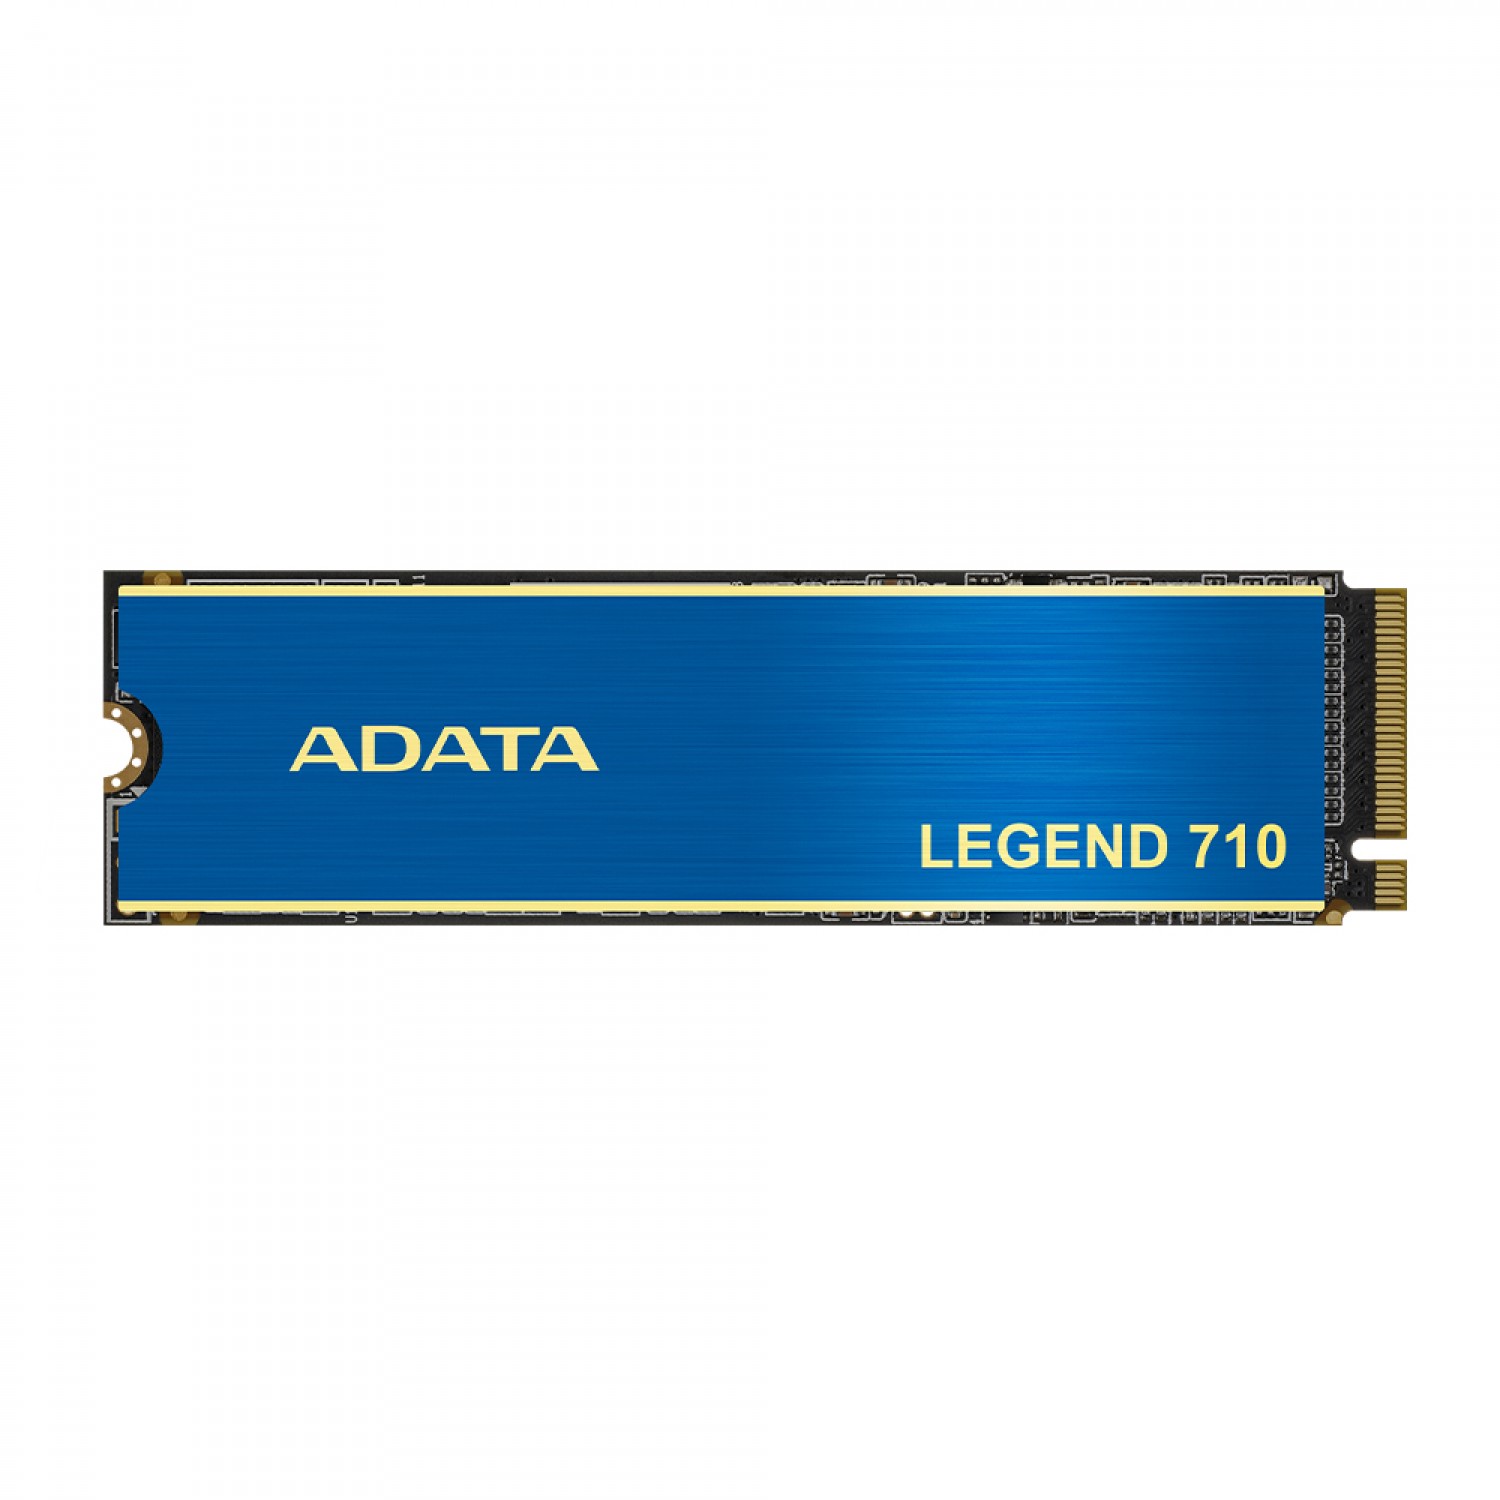 حافظه اس اس دی ADATA Legend 710 256GB